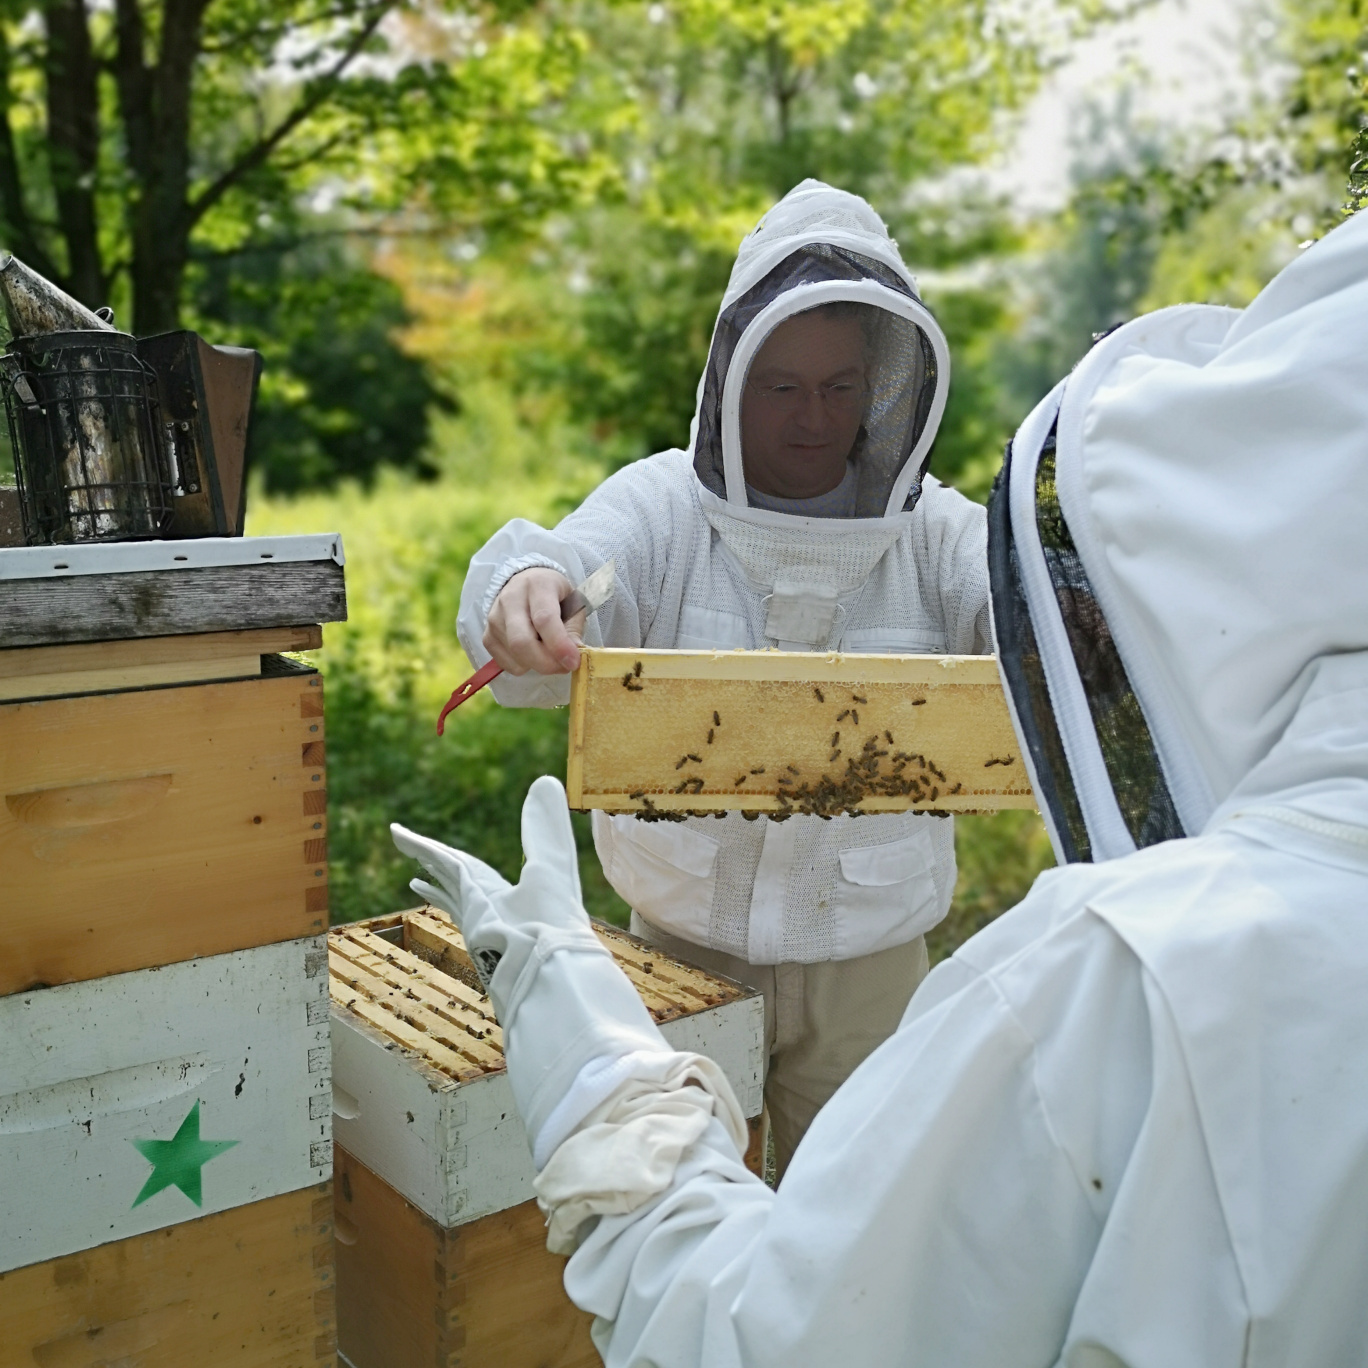 Les miels et produits de la ruche